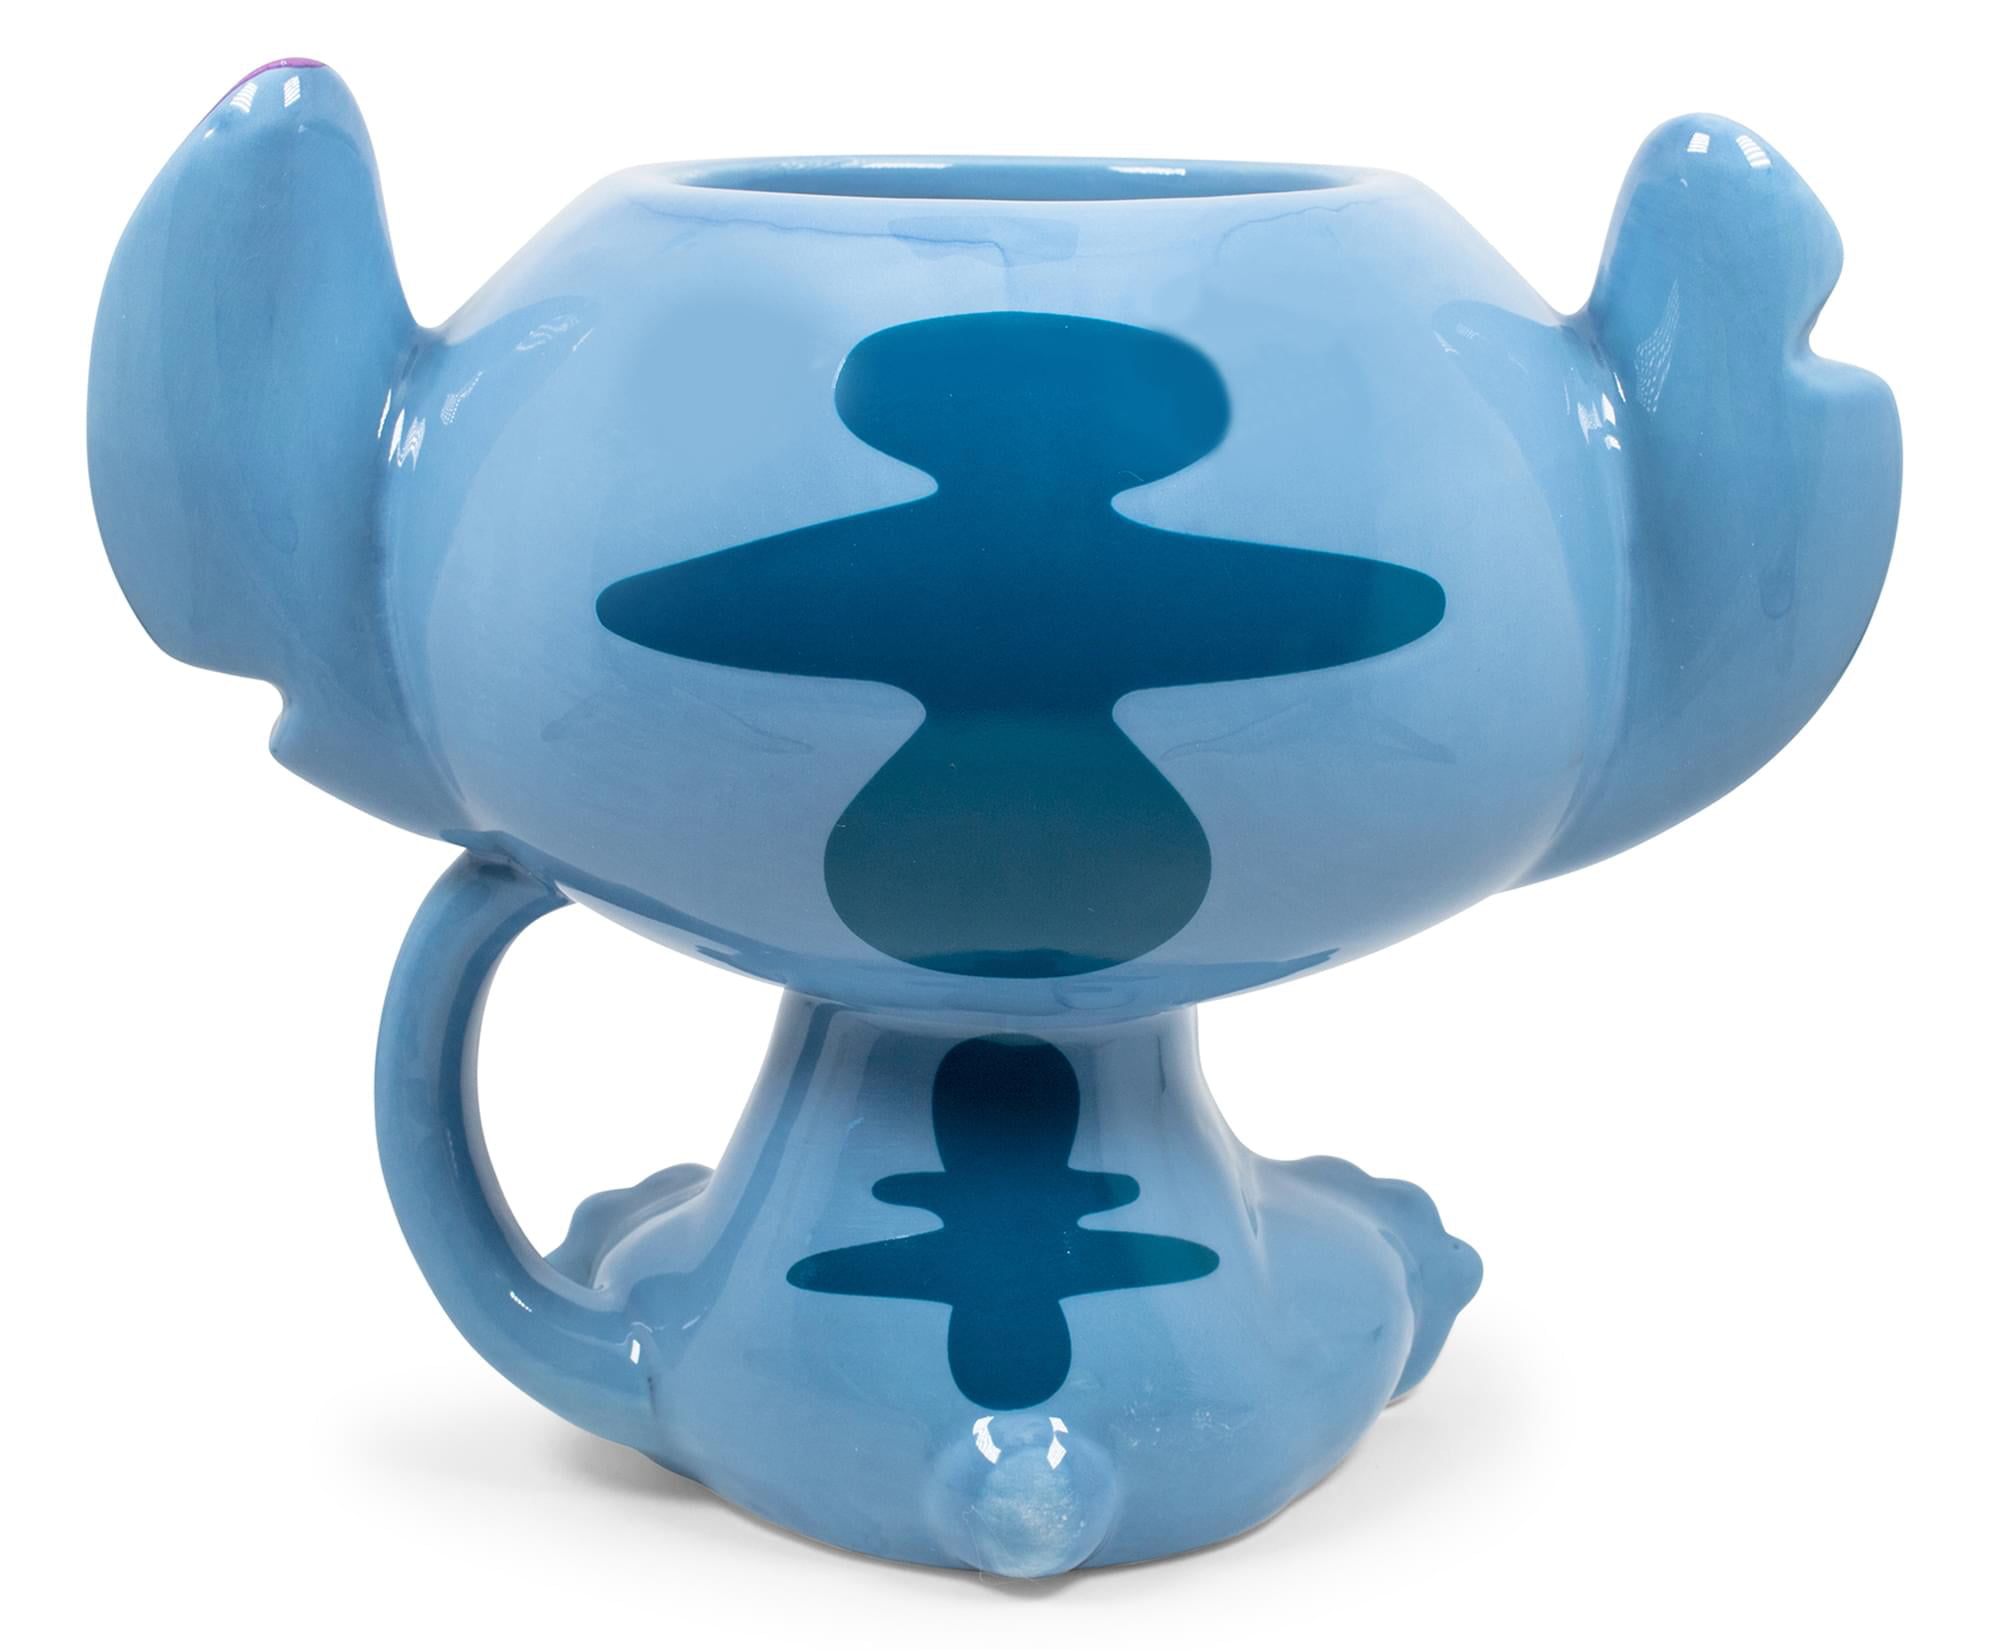 Disney : Lilo & Stitch - Mug 3D Stitch - Imagin'ères